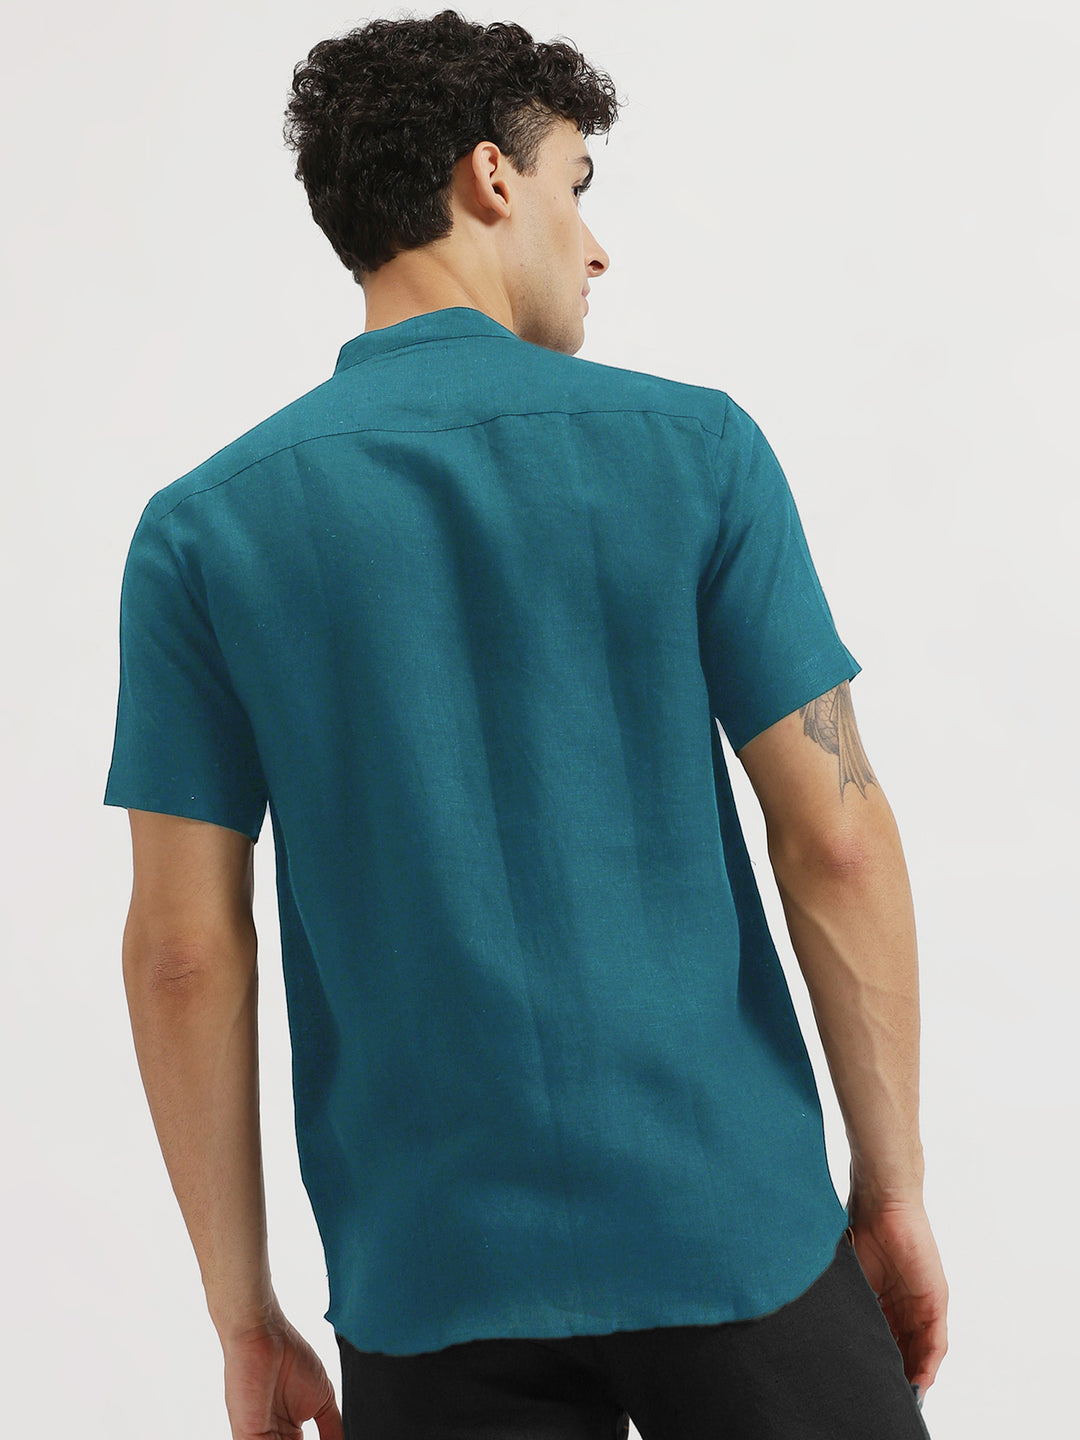 Ronan - Pure Linen Mandarin Collar Half Sleeve Shirt - Peacock Blue